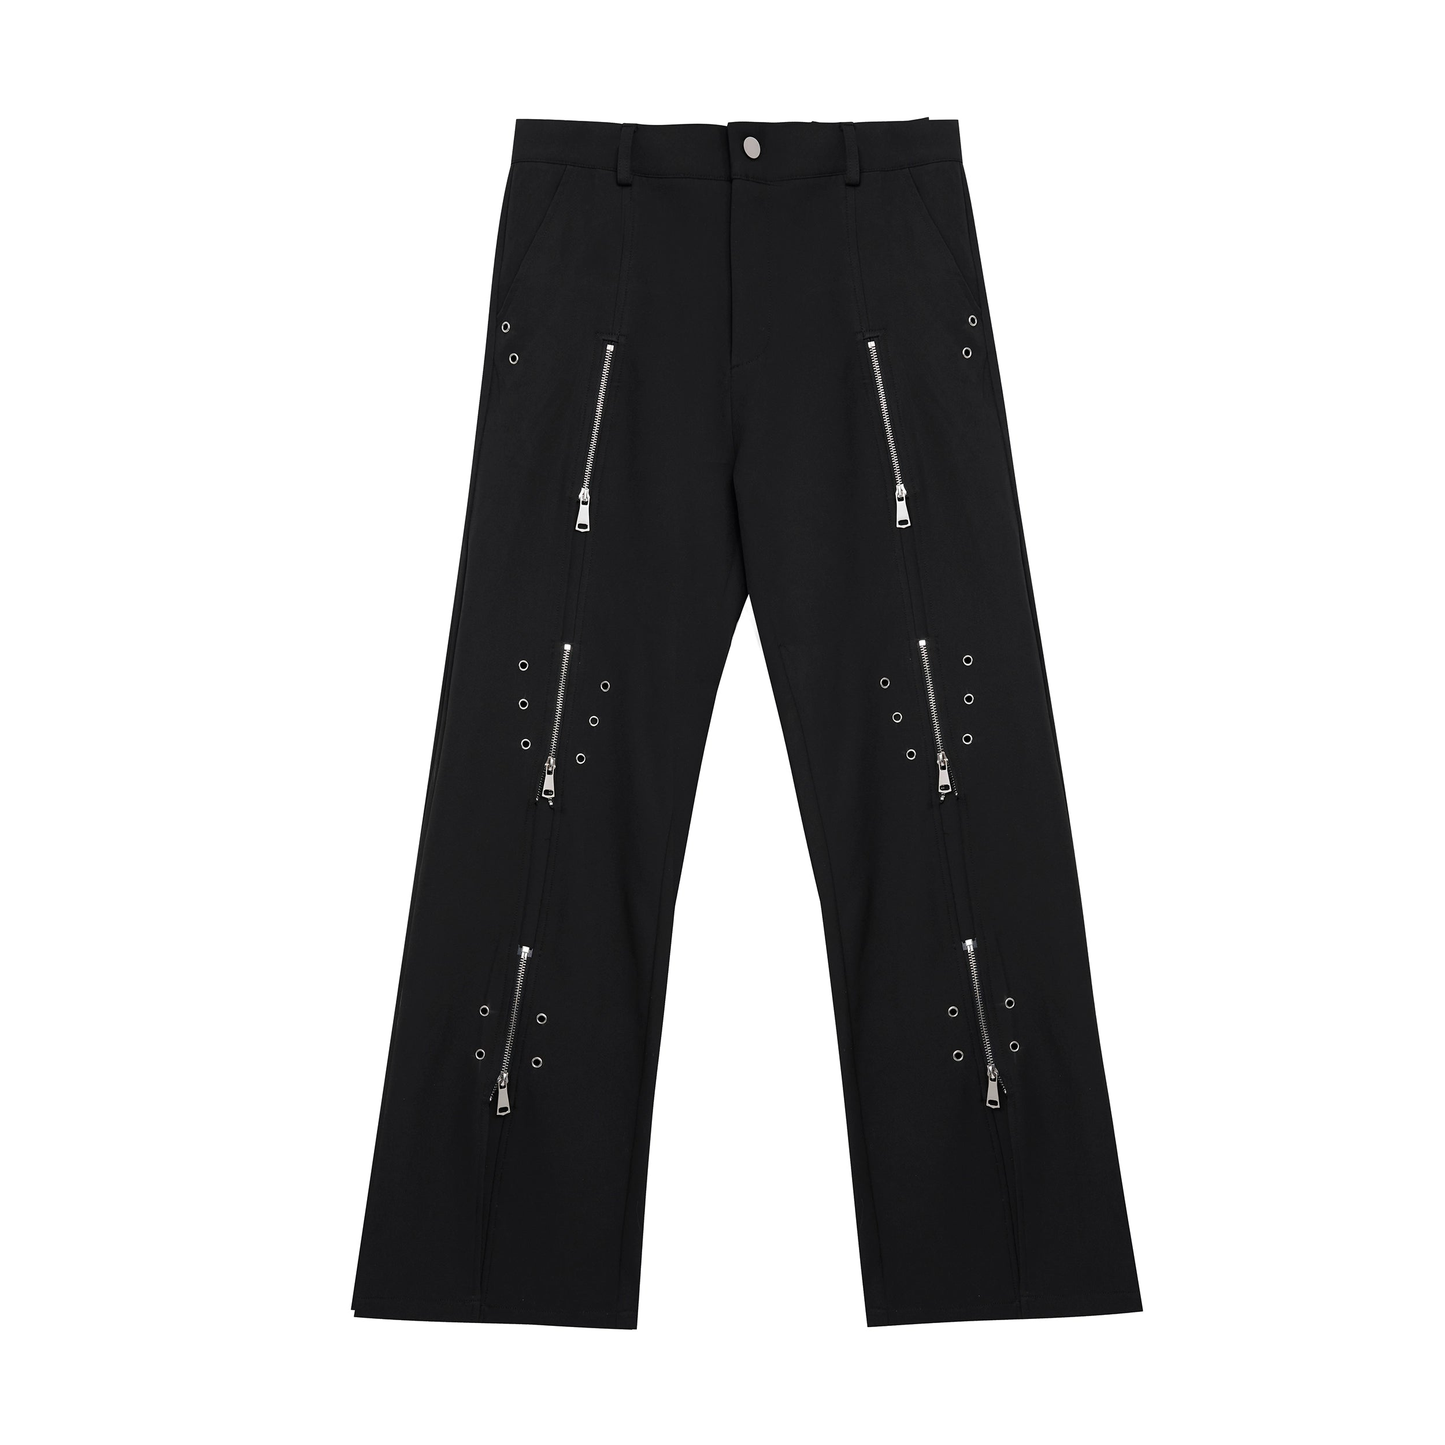 Metal Slit Line Design Loose Fitting Pants WN4032